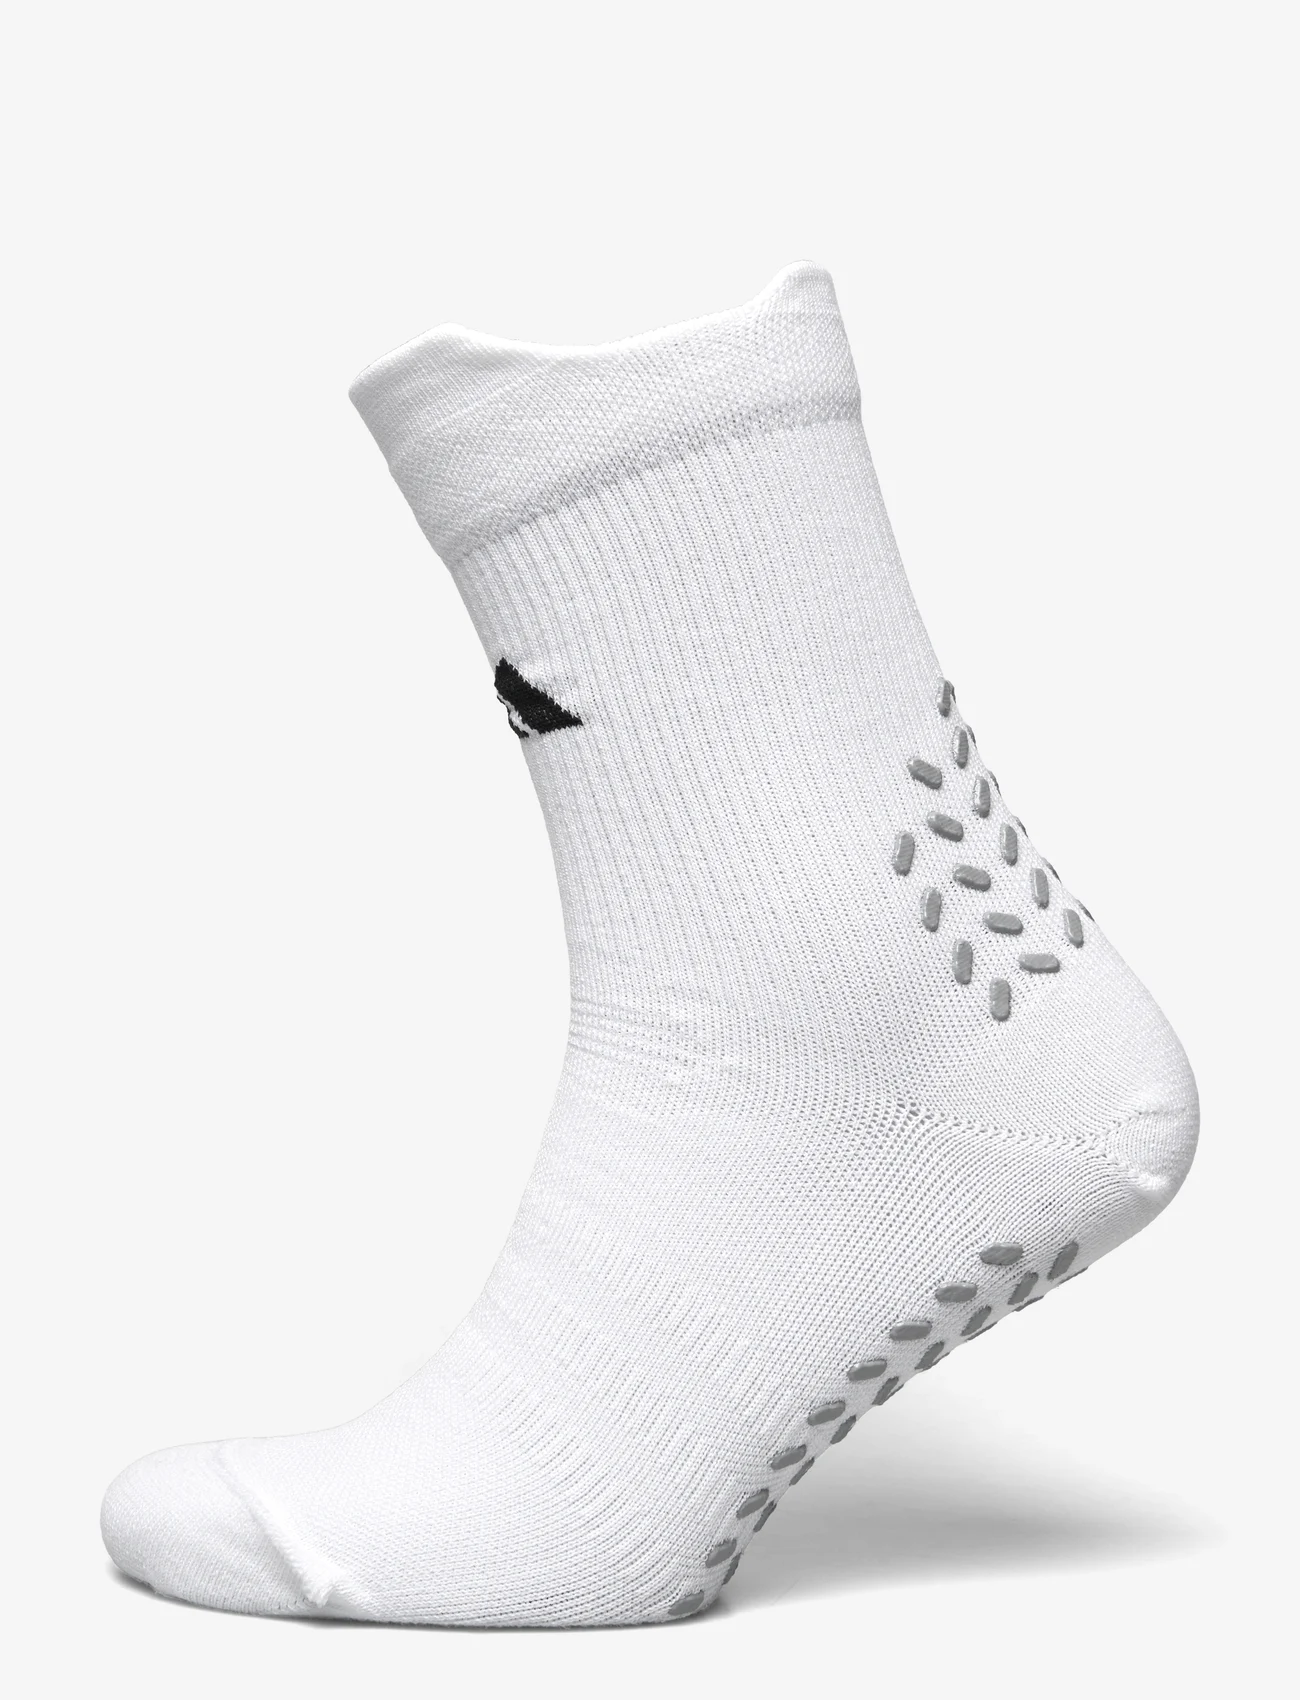 adidas Performance - Adidas Football GRIP Printed Crew Performance Socks Light - lägsta priserna - white/black - 0